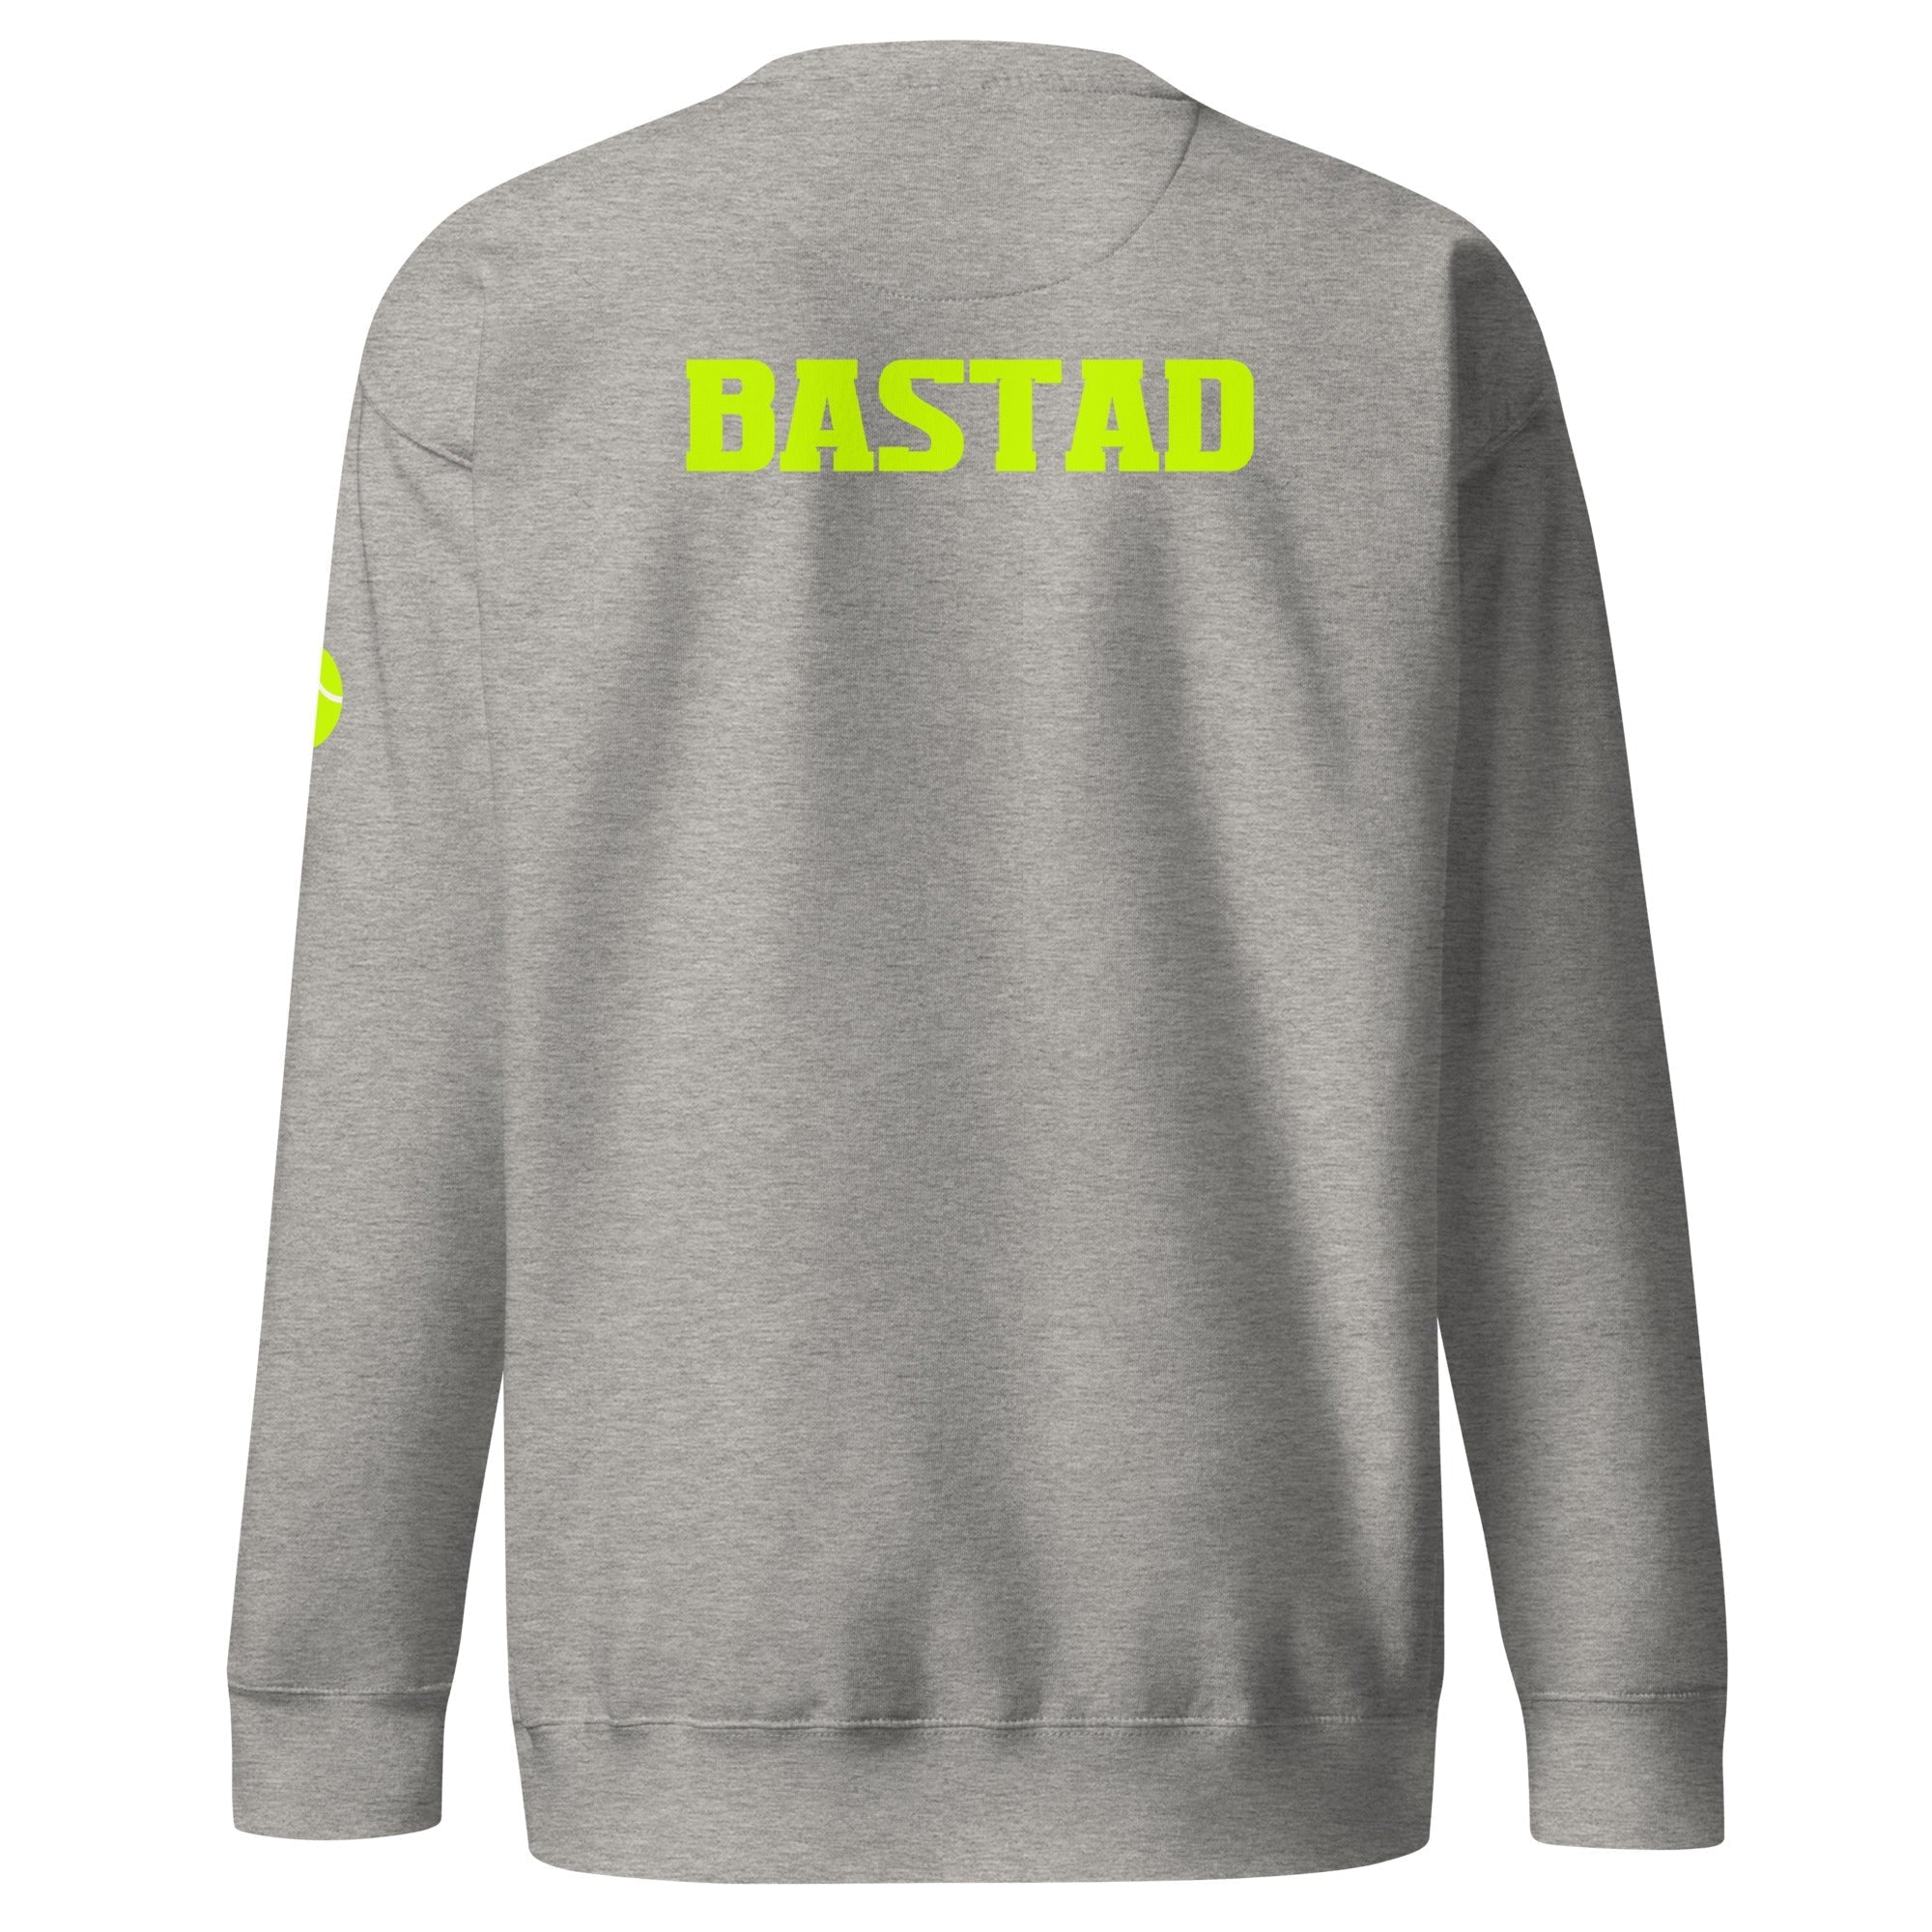 Unisex Premium Sweatshirt - Tennis Masters Bastad - GRAPHIC T-SHIRTS